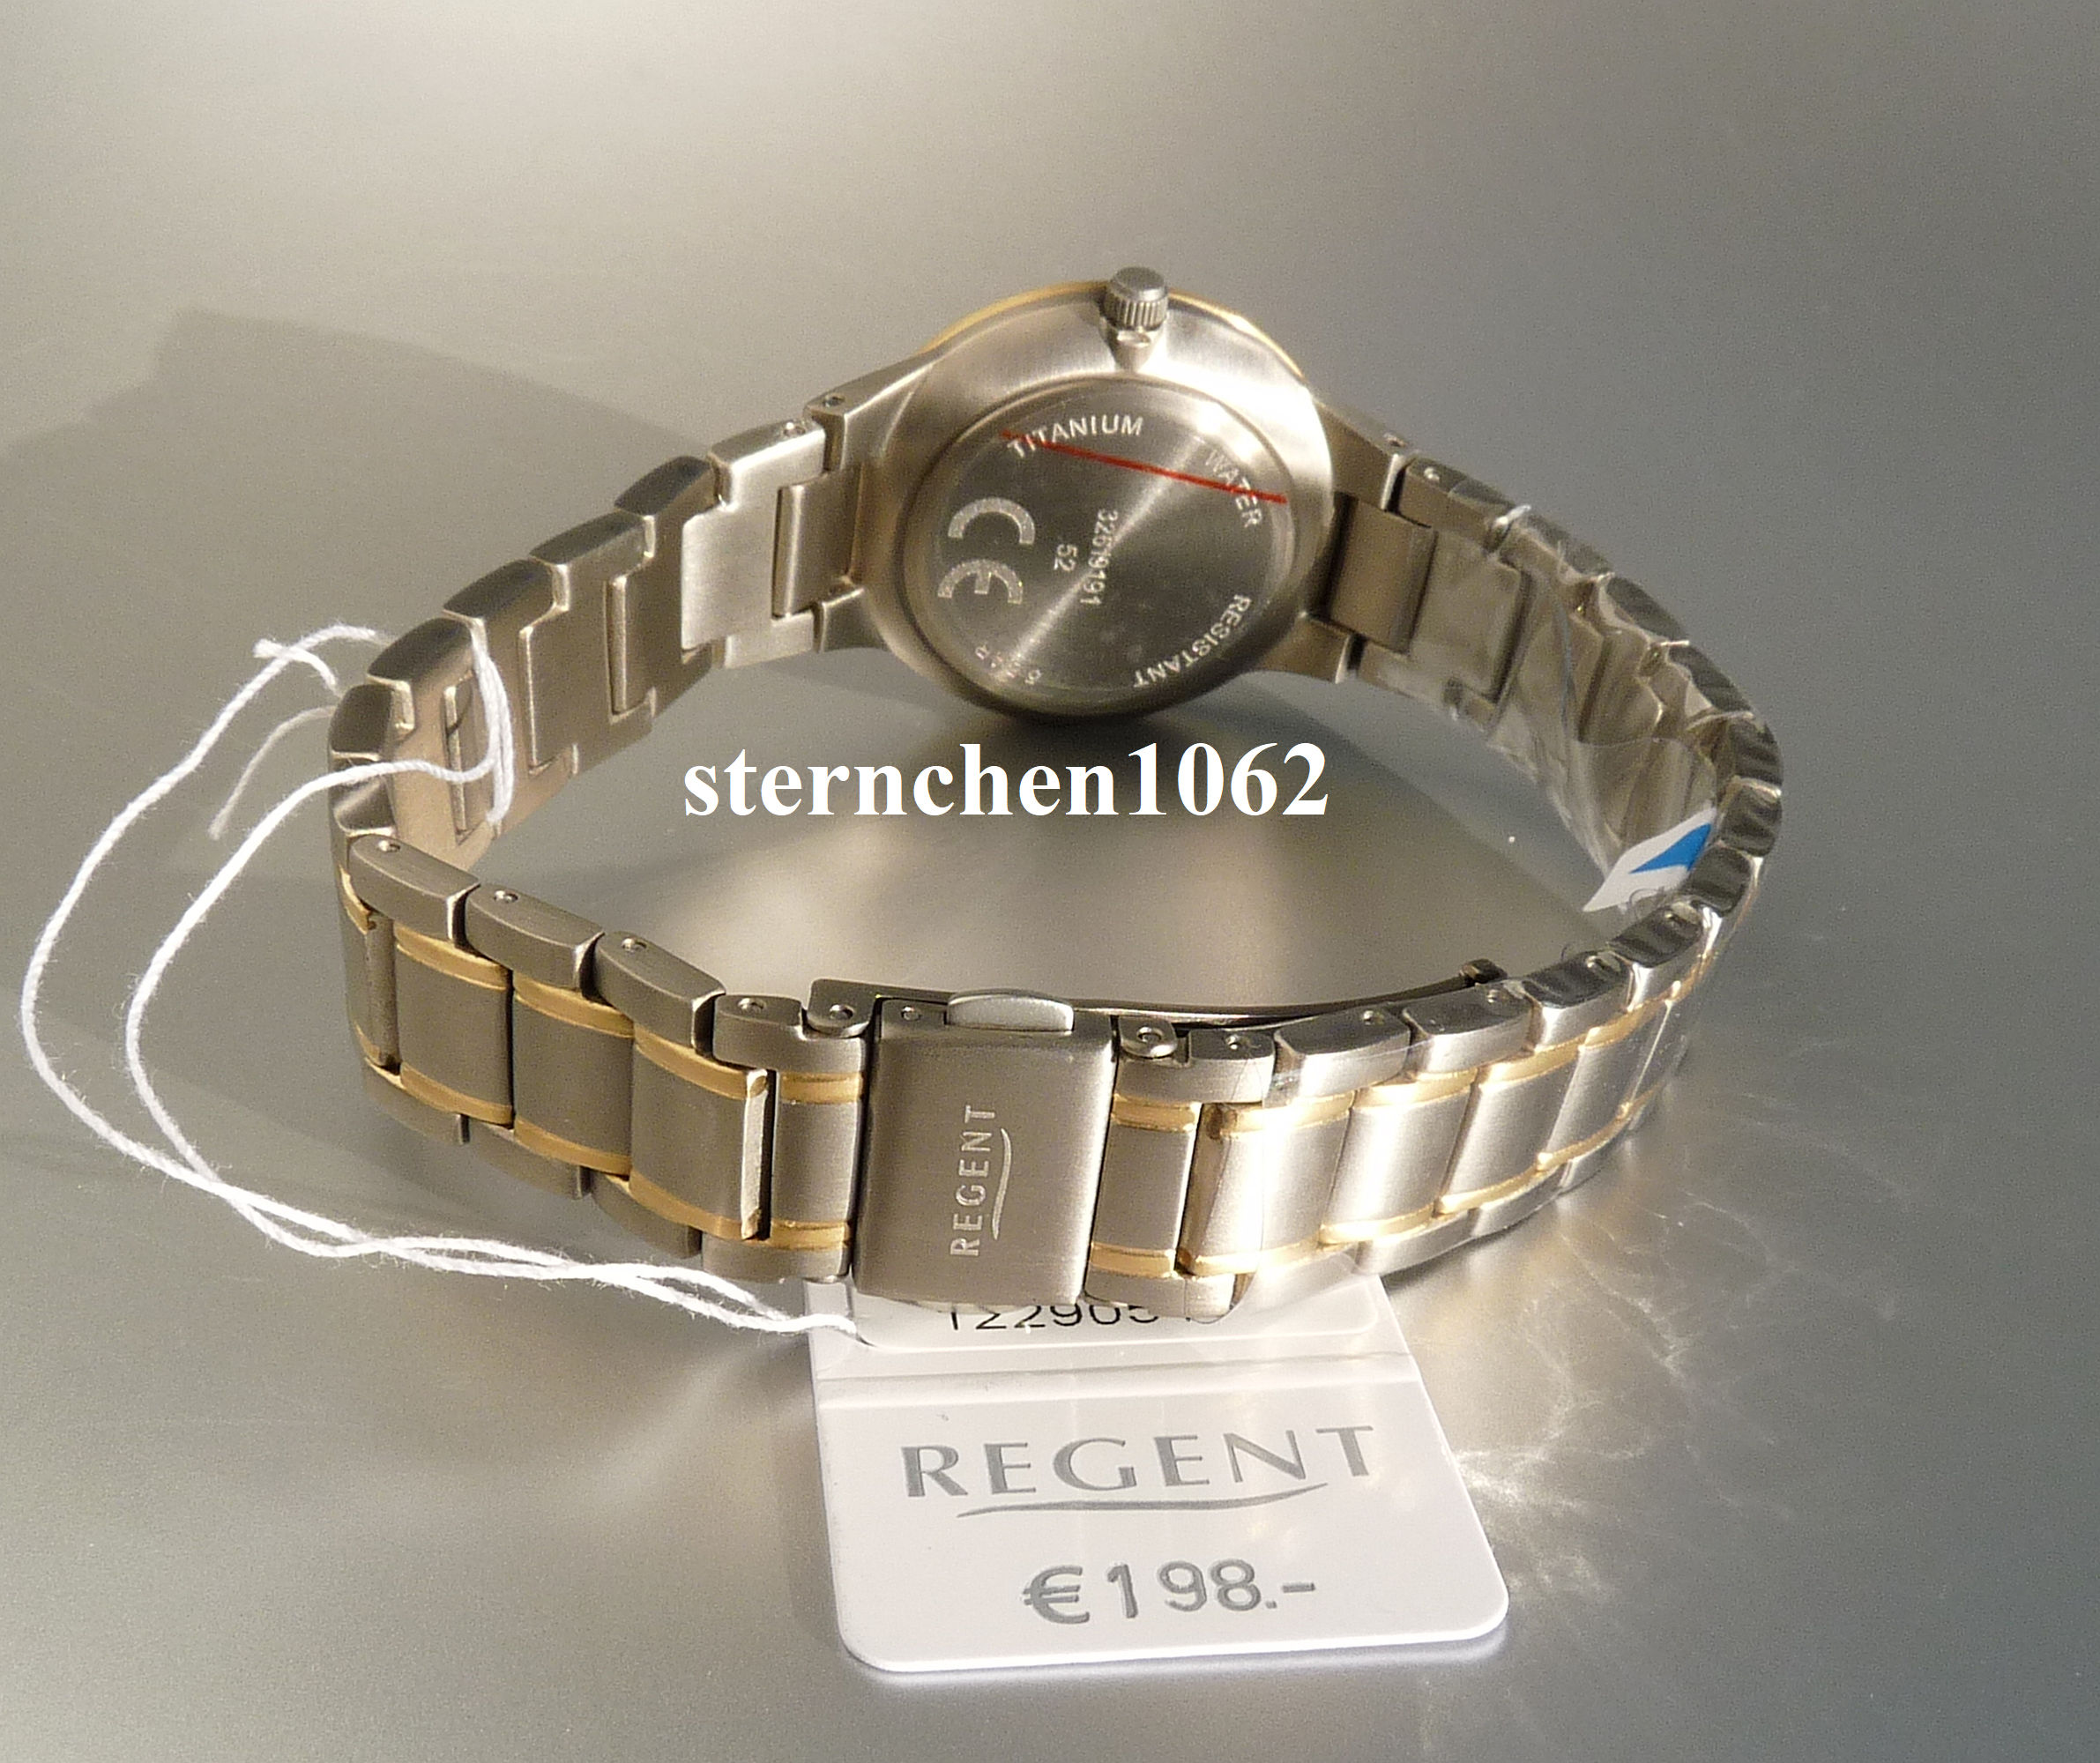 Sternchen 1062 - Regent * Damen-Armbanduhr * Ref. 12290513 BA-713 * Solar *  Titan Bicolor *